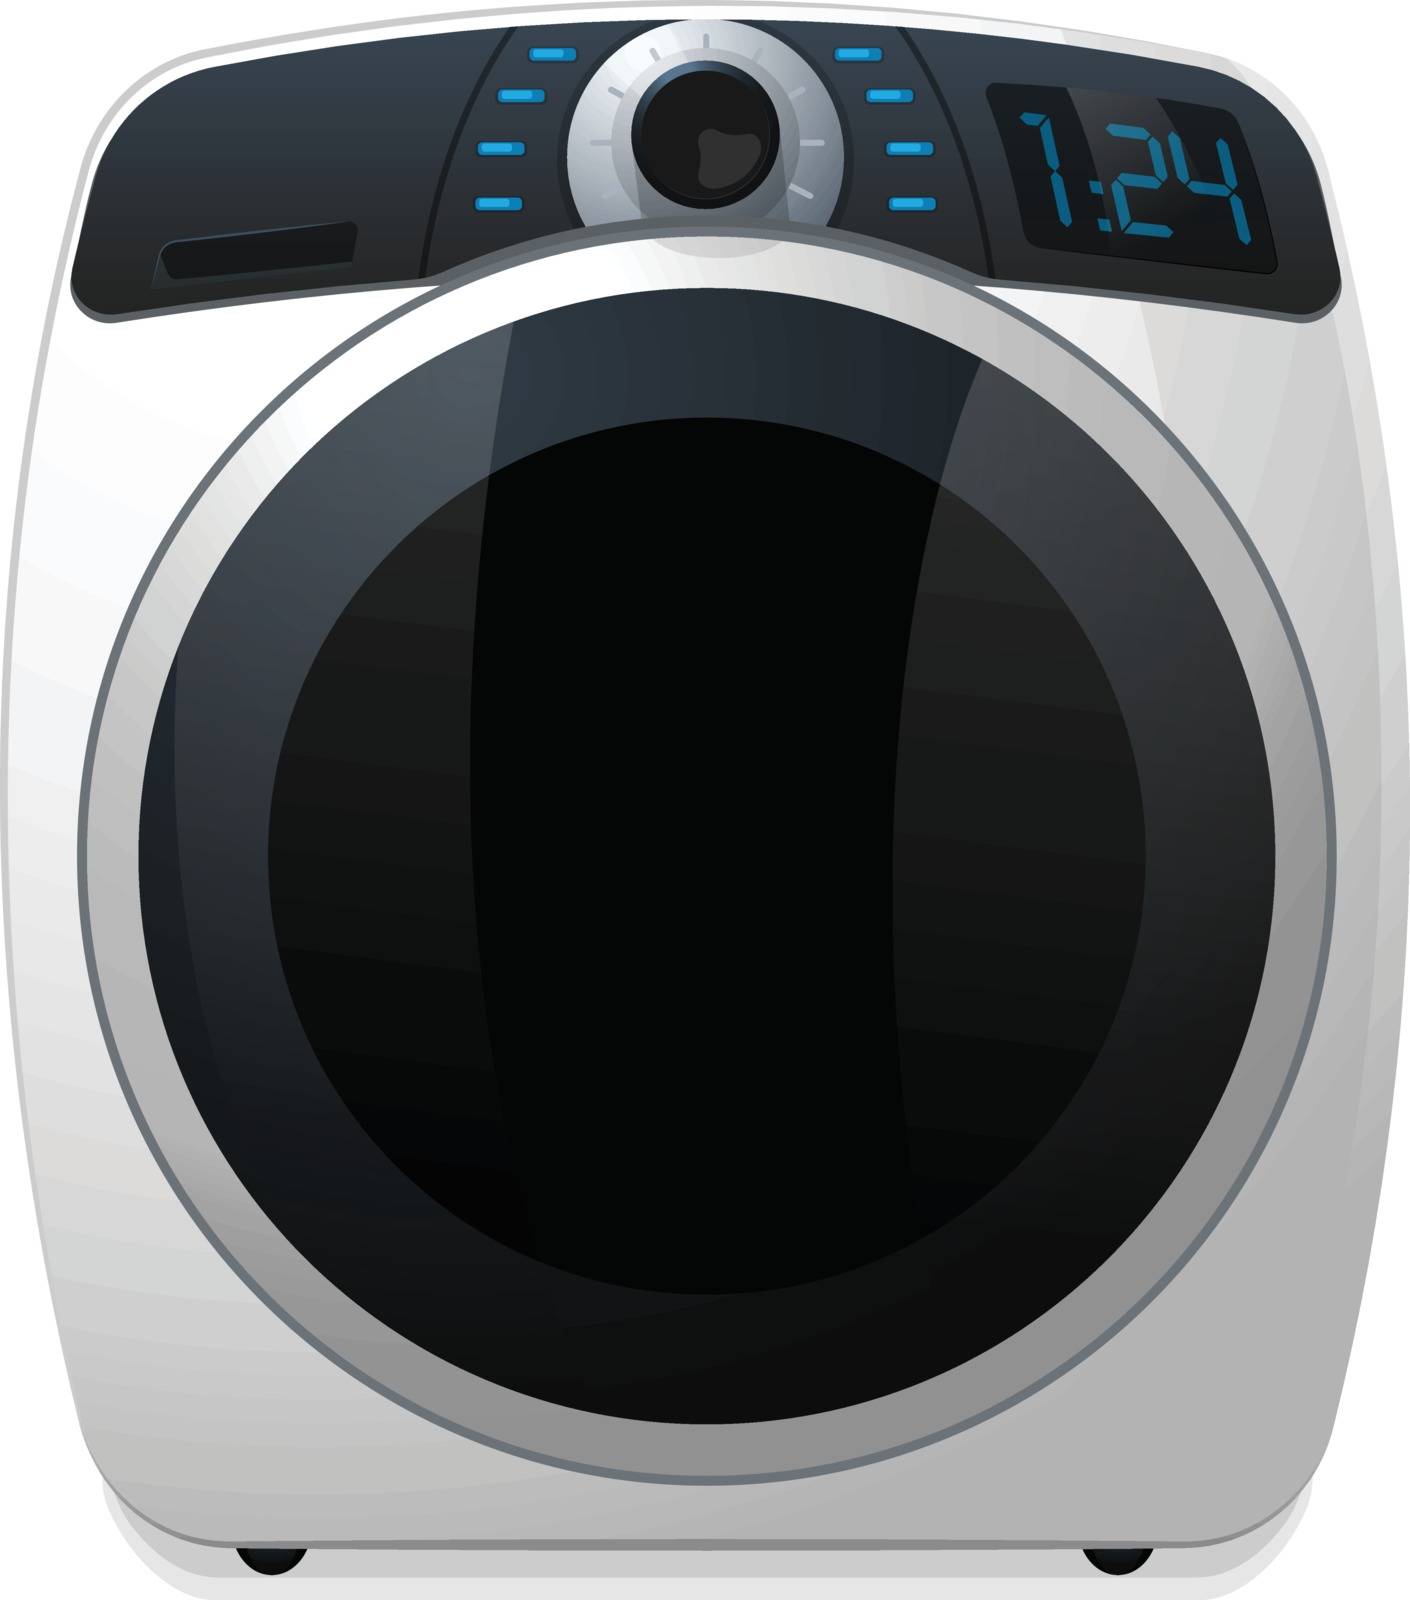 washer machine icon by ayax